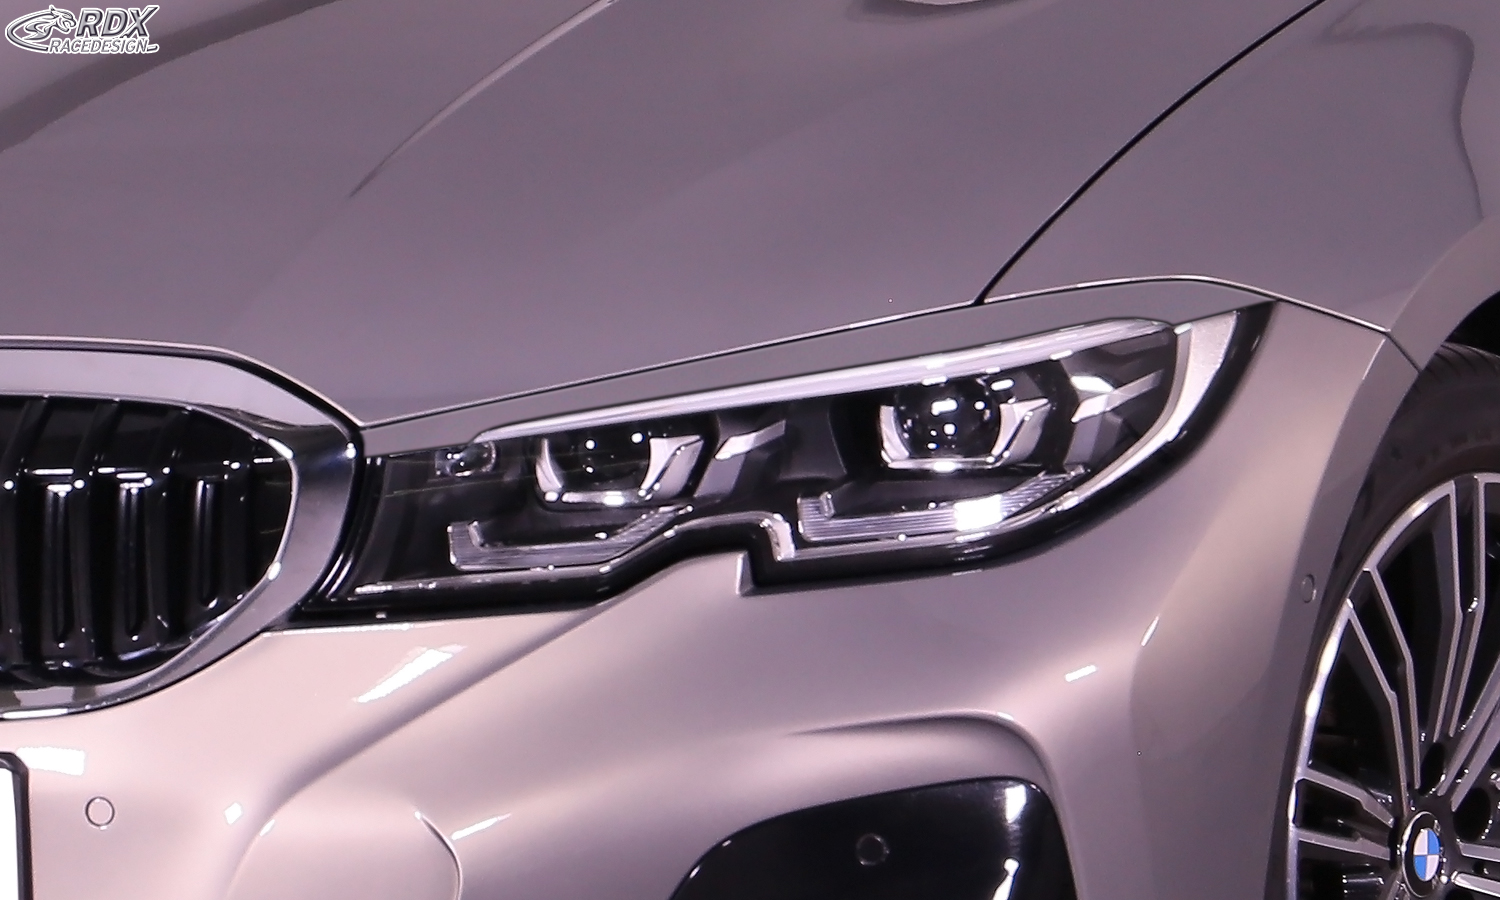 RDSB163 - RDX Headlight covers for BMW 3-series G20 G21 Light Brows